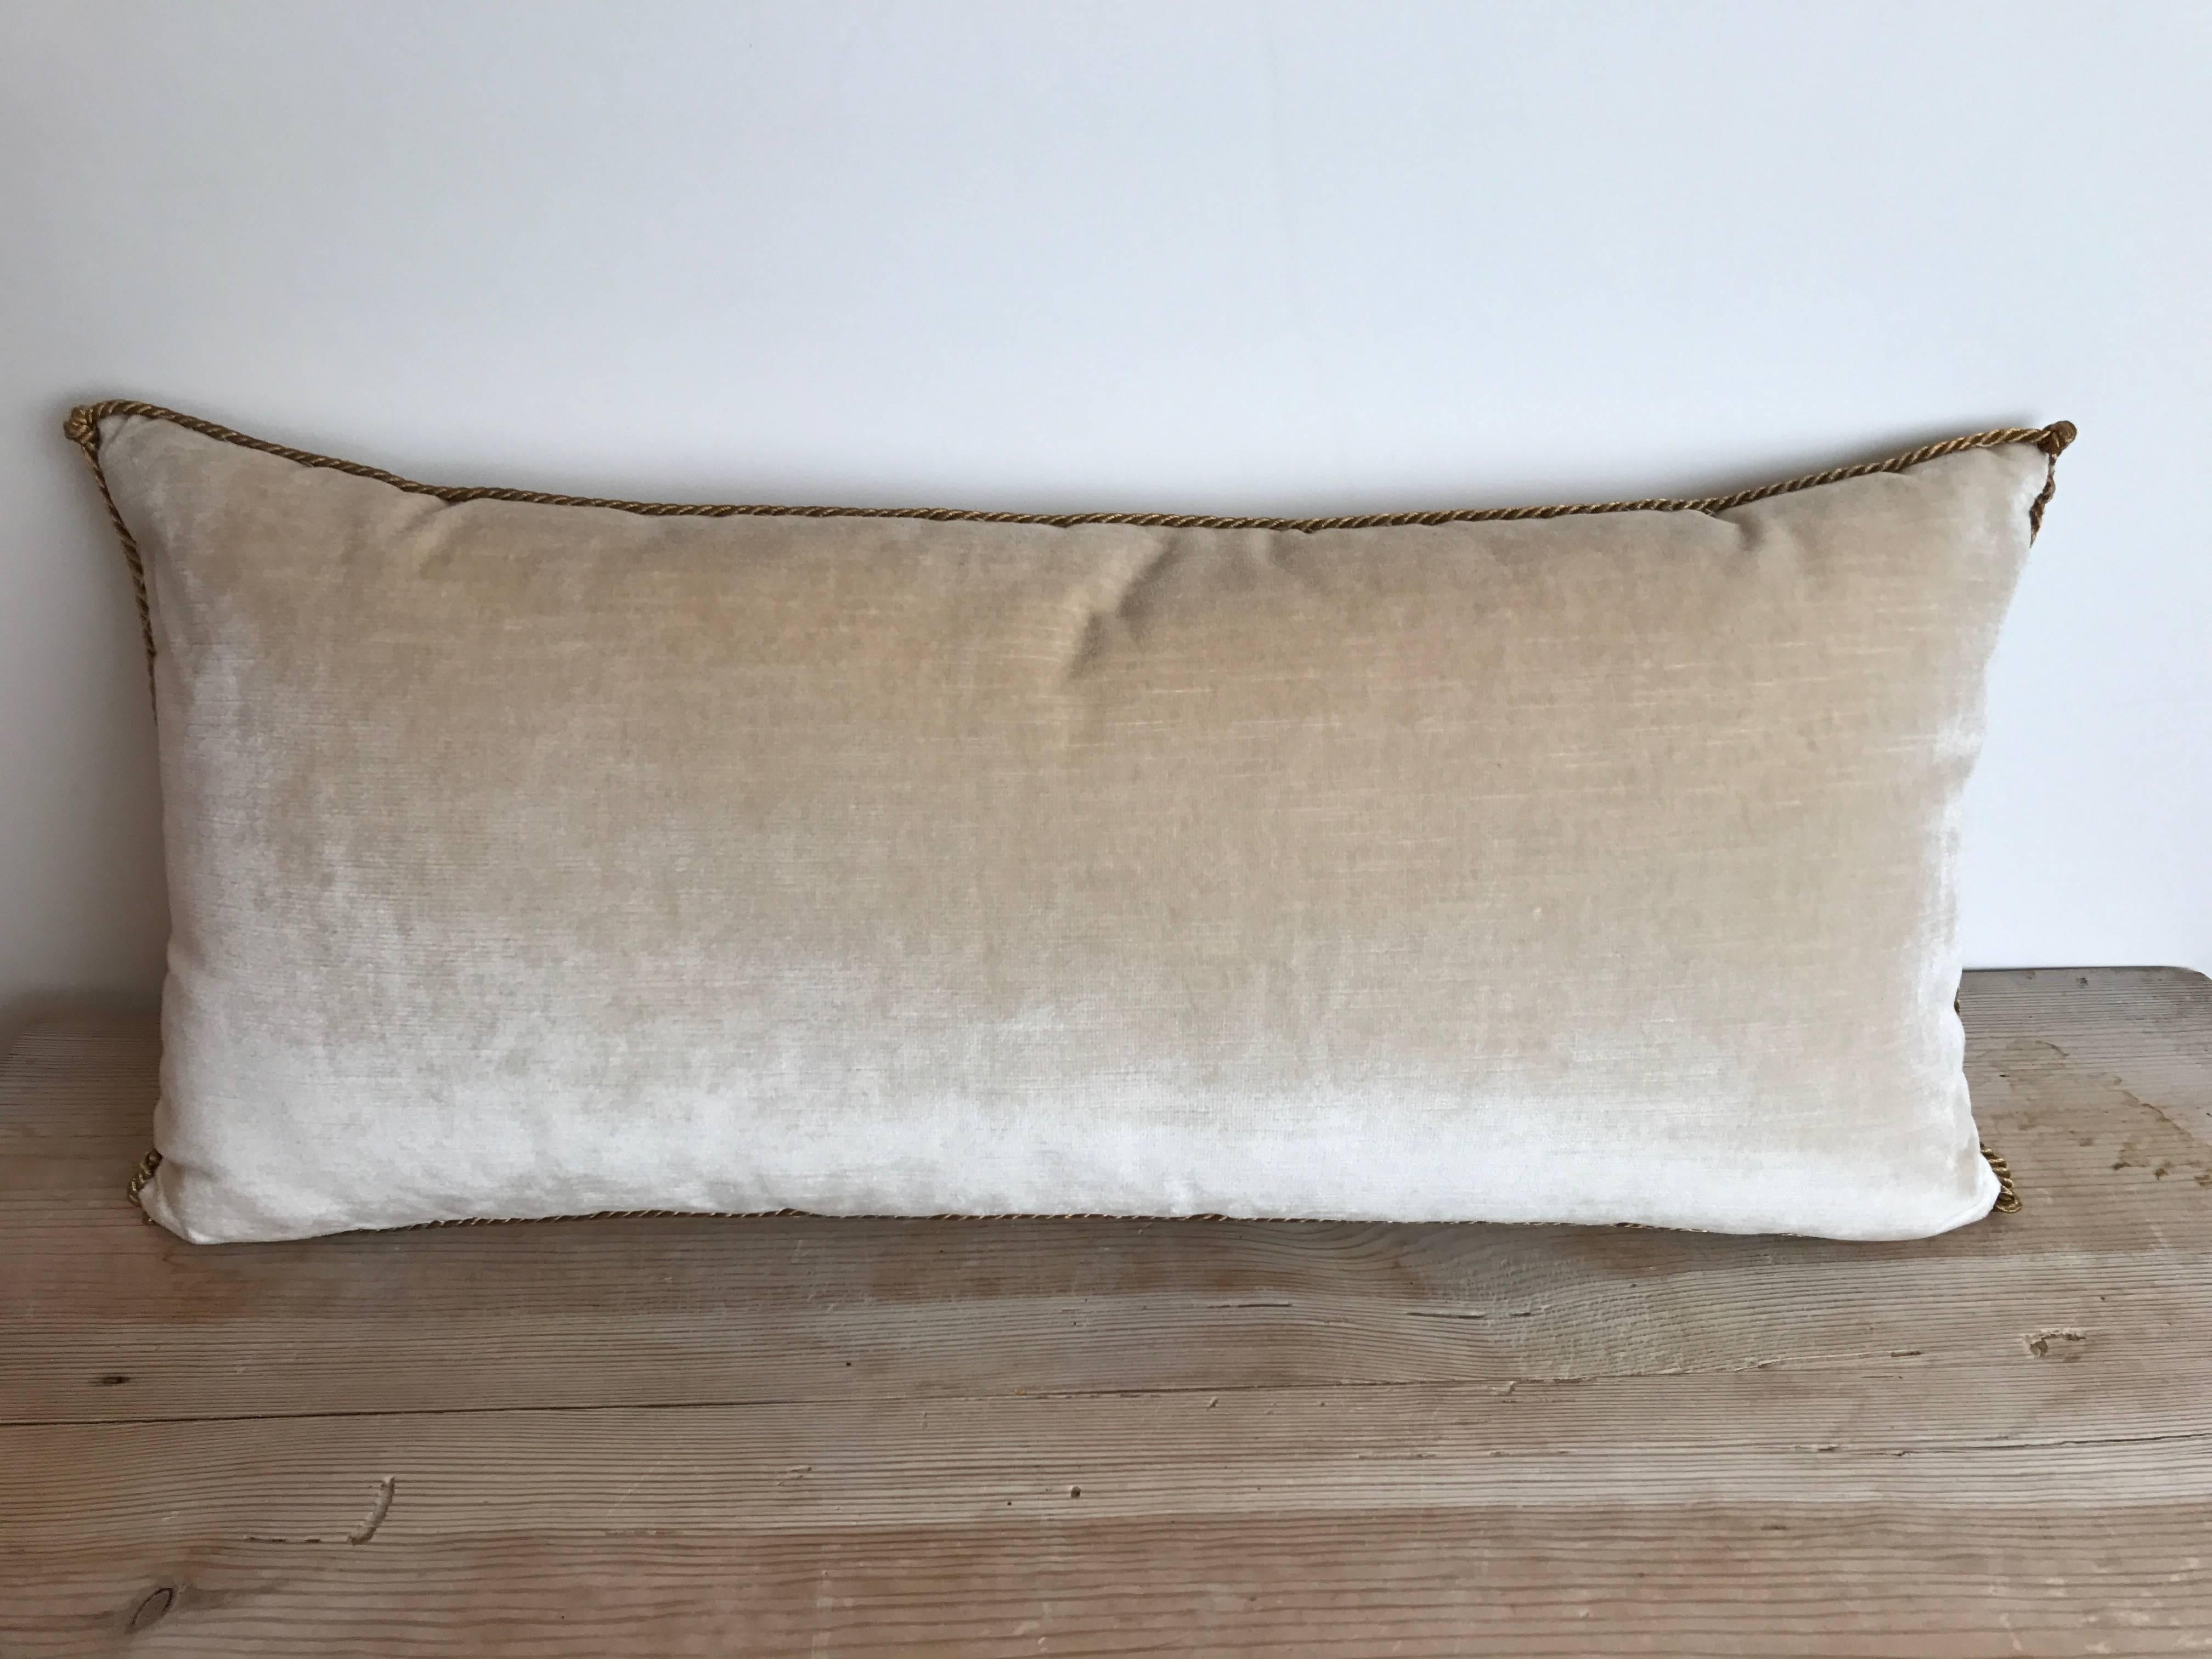 Antique Ottoman Empire Pillow In Excellent Condition For Sale In Boston, MA